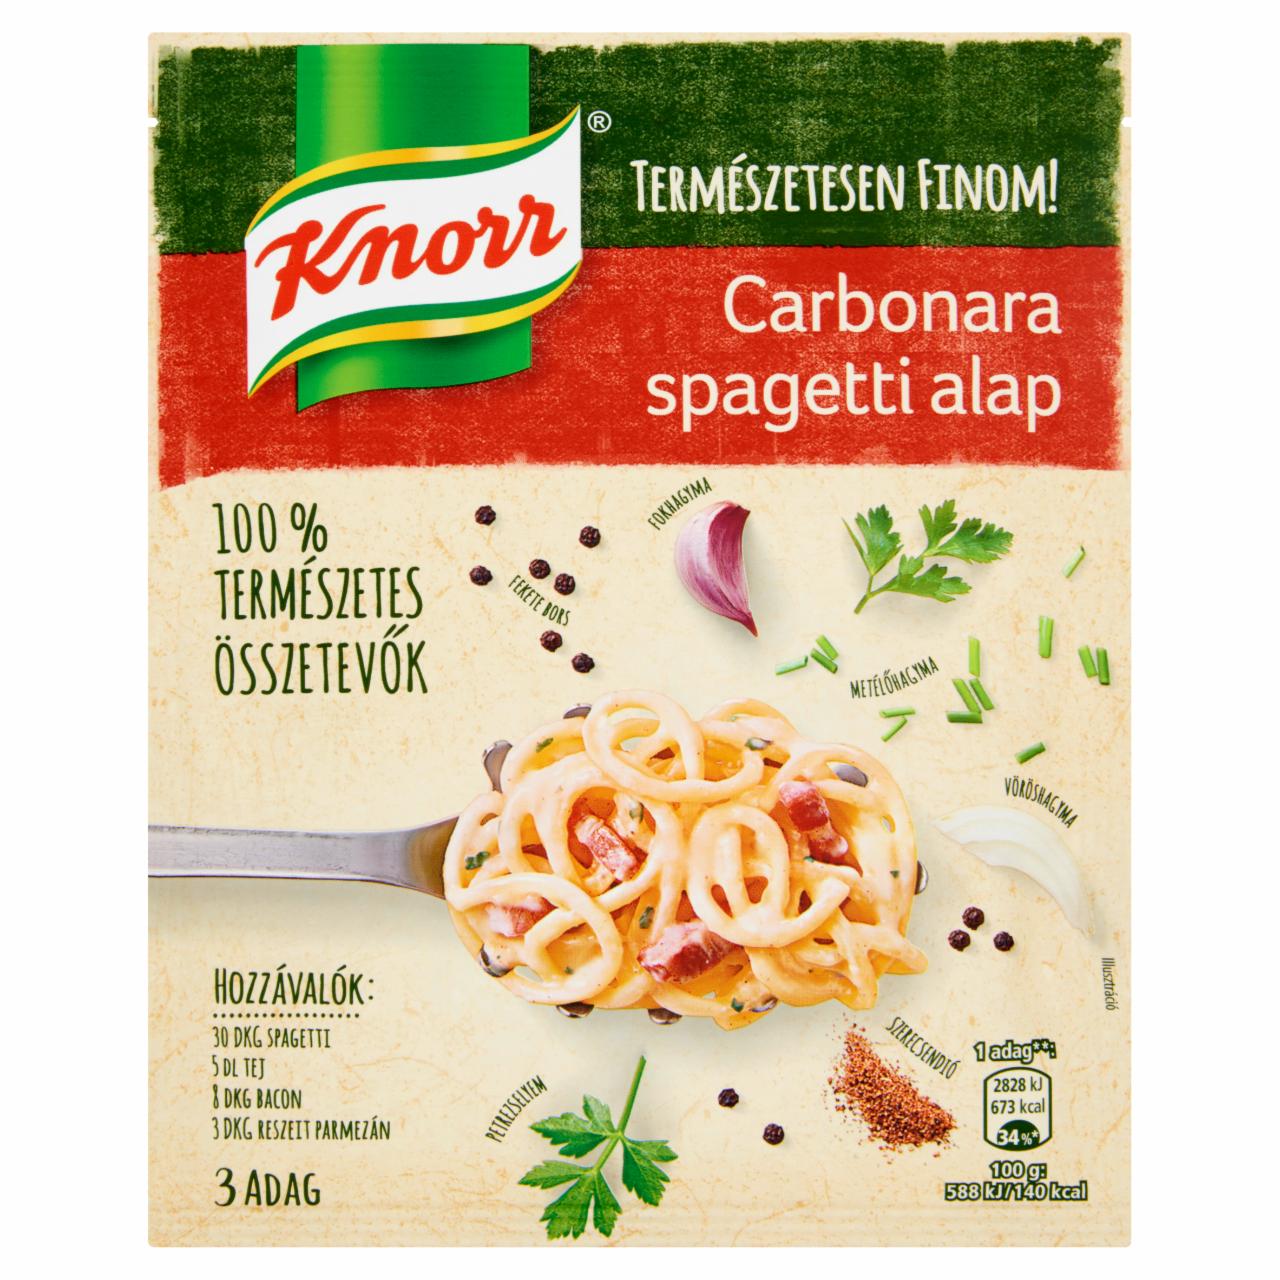 Képek - Knorr carbonara spagetti alap 47 g